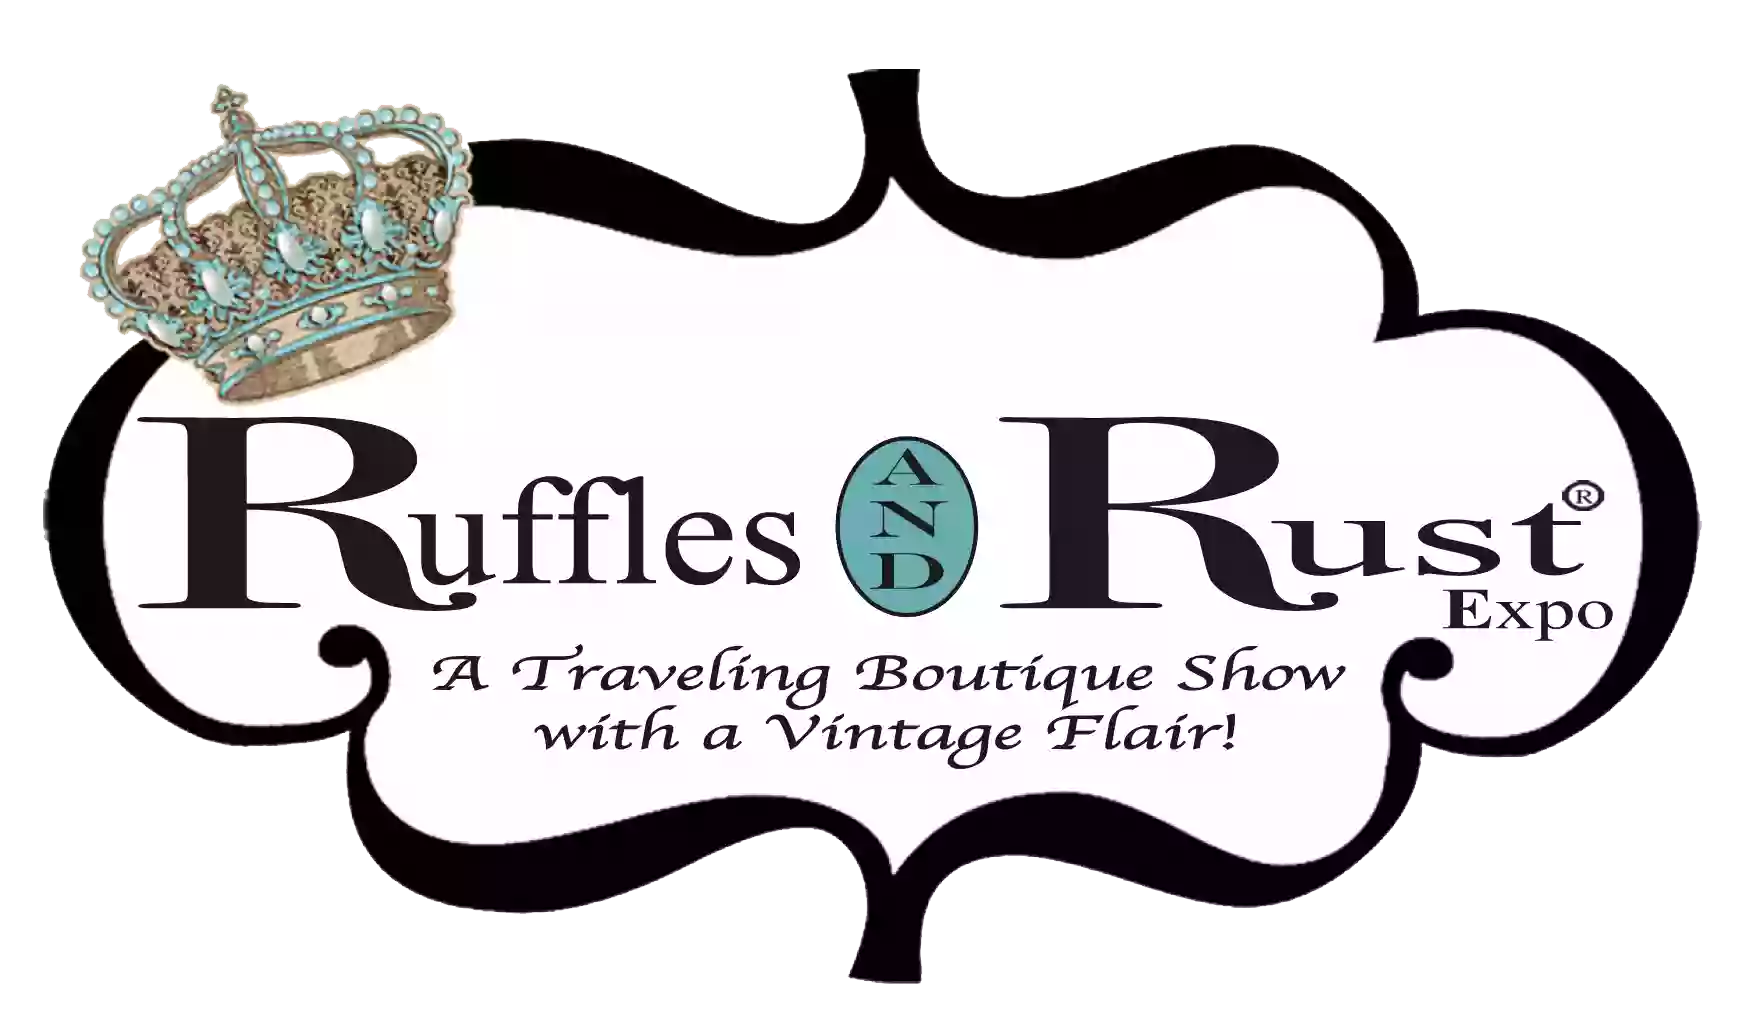 Ruffles and Rust Expo